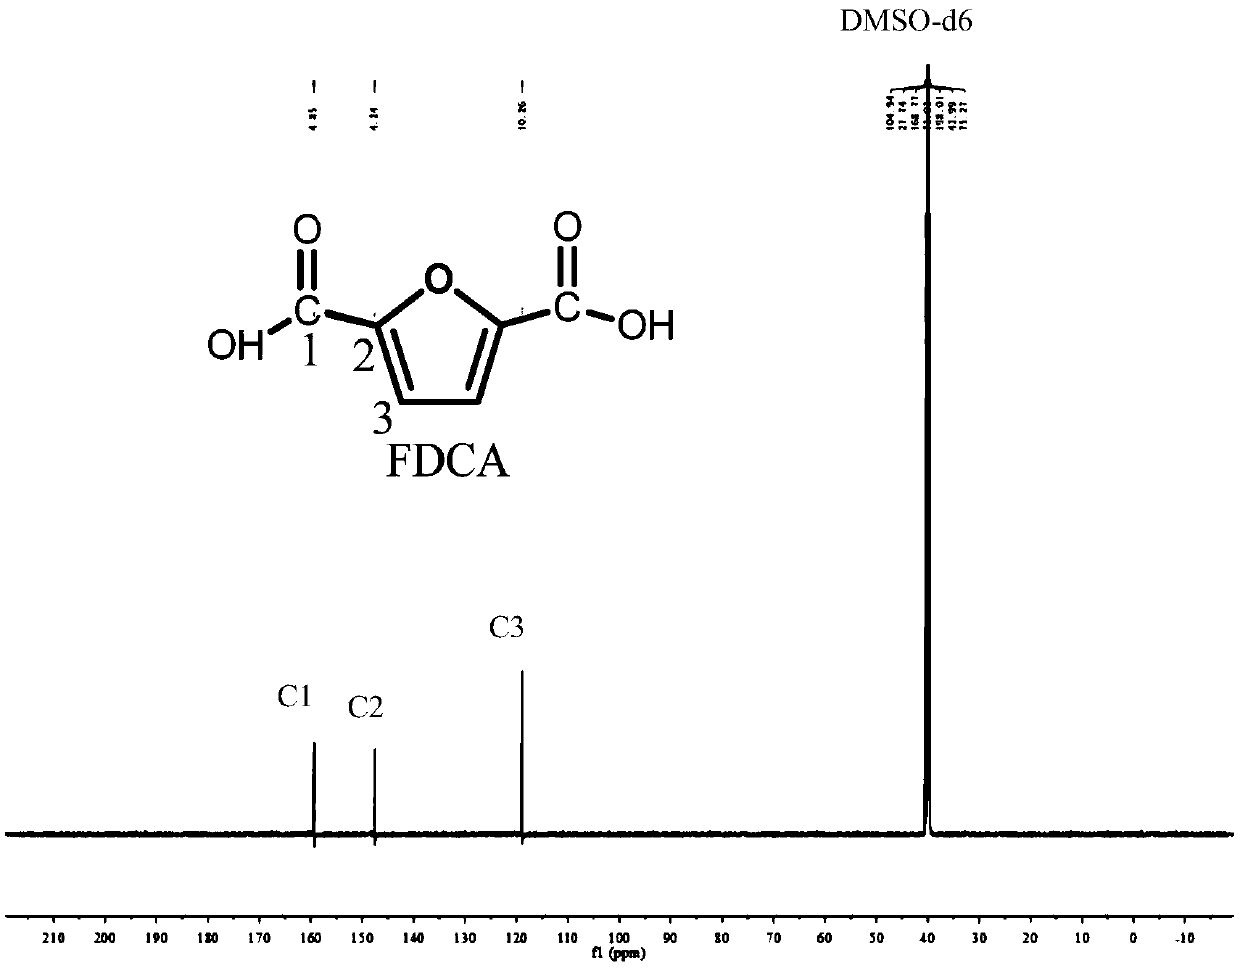 2, 5-furandicarboxylic acid preparing method